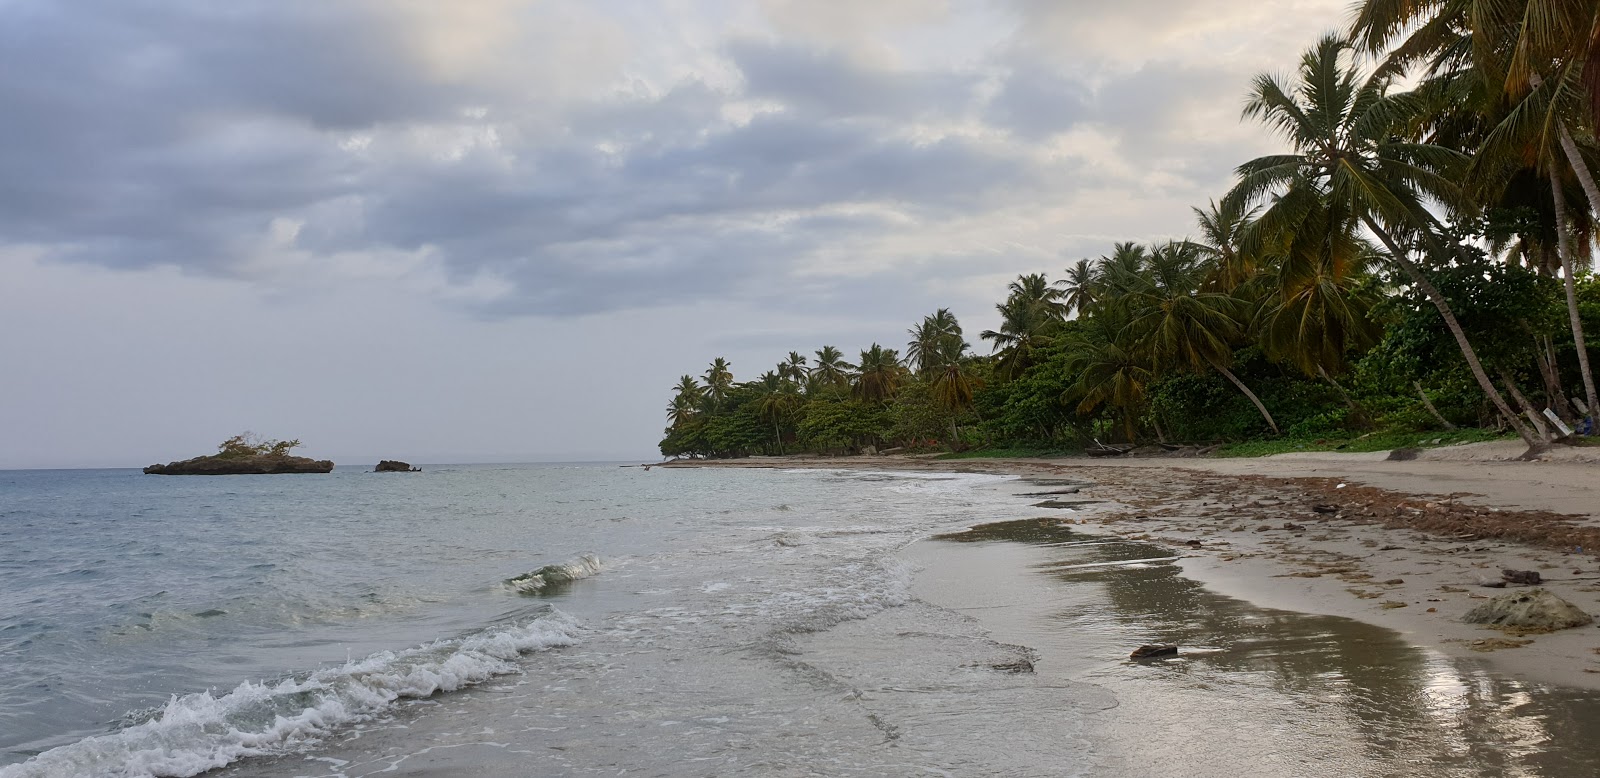 Photo of Playa Anacaona with gray sand surface